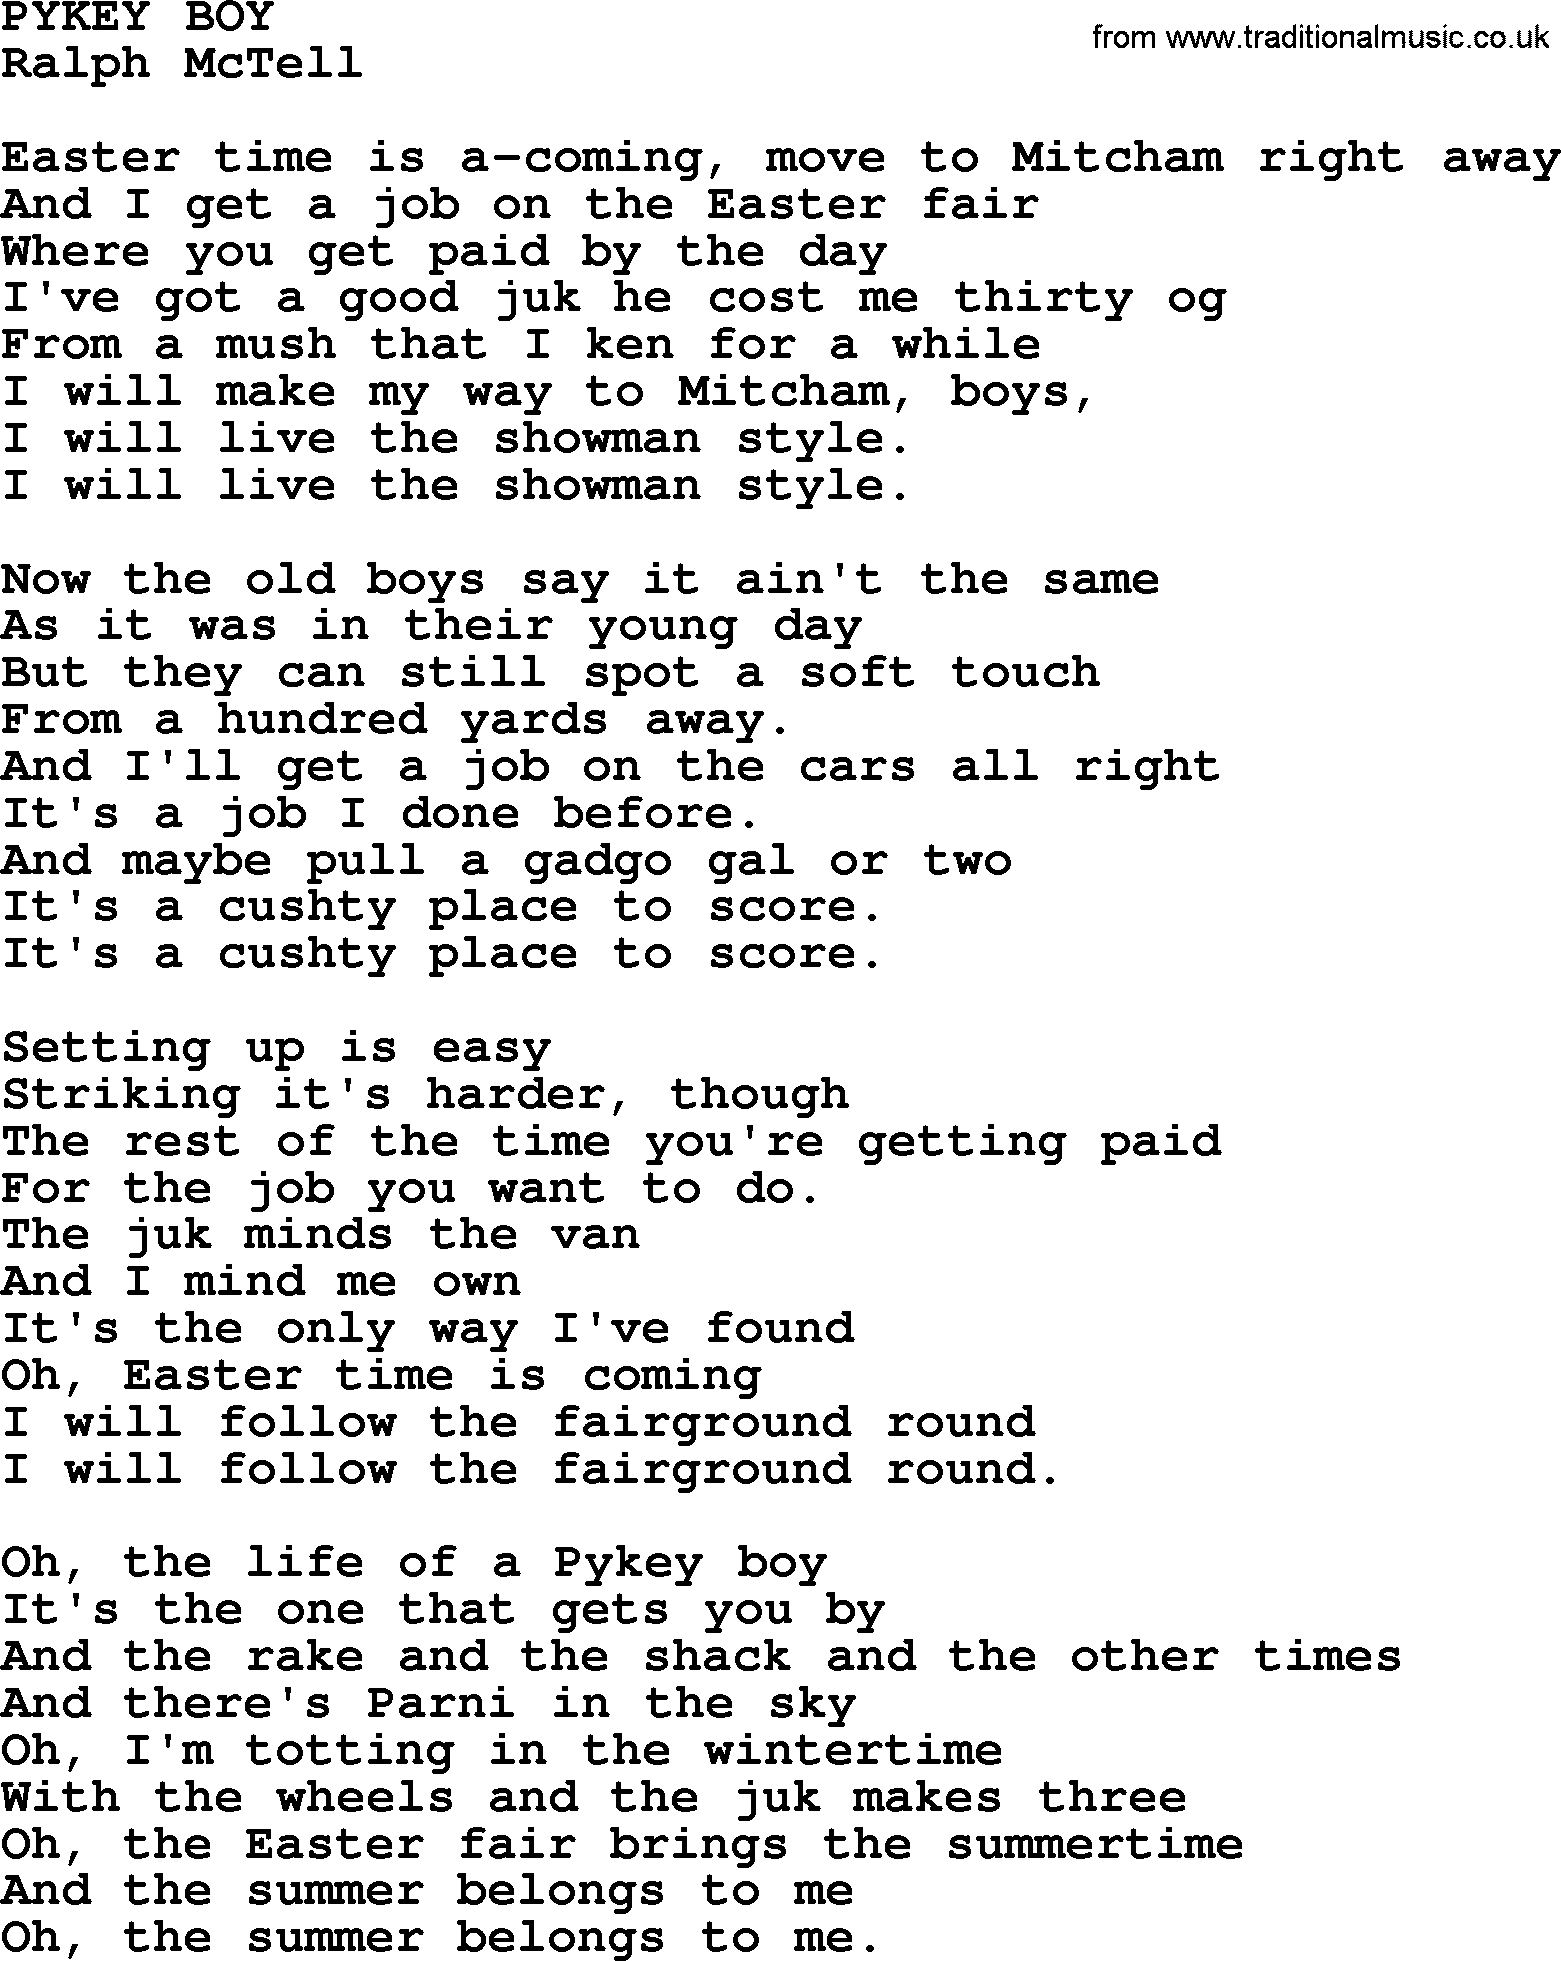 Ralph McTell Song: Pykey Boy, lyrics